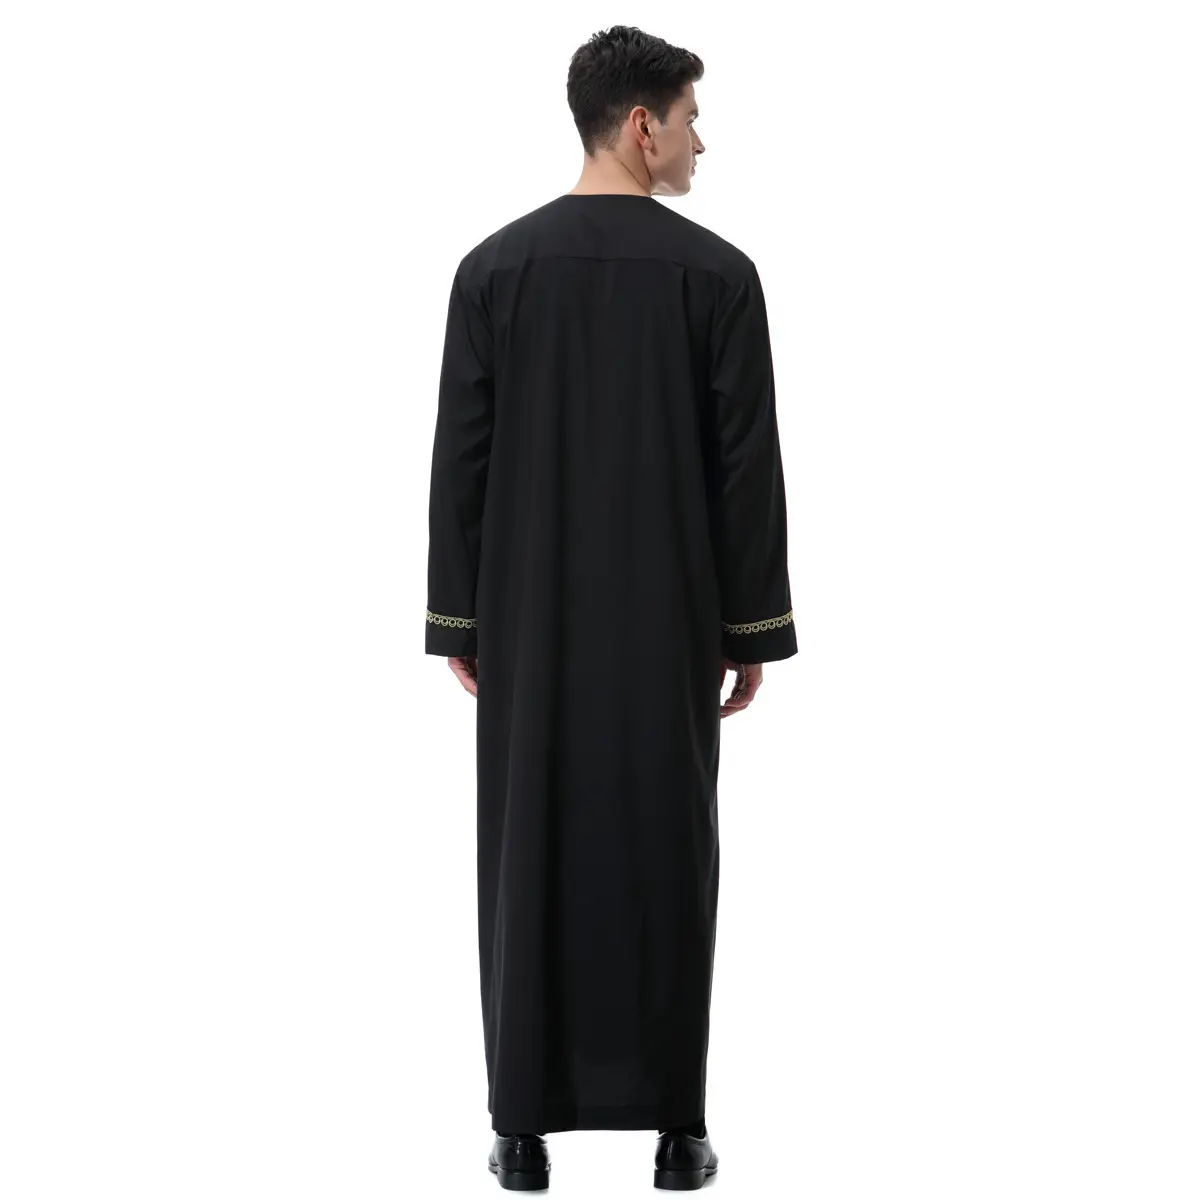 Großhandel Fabrik Malaysia Arab Middle East Thobe traditionelle muslimische Kleidung Simple Fashion Herren Robe Abaya